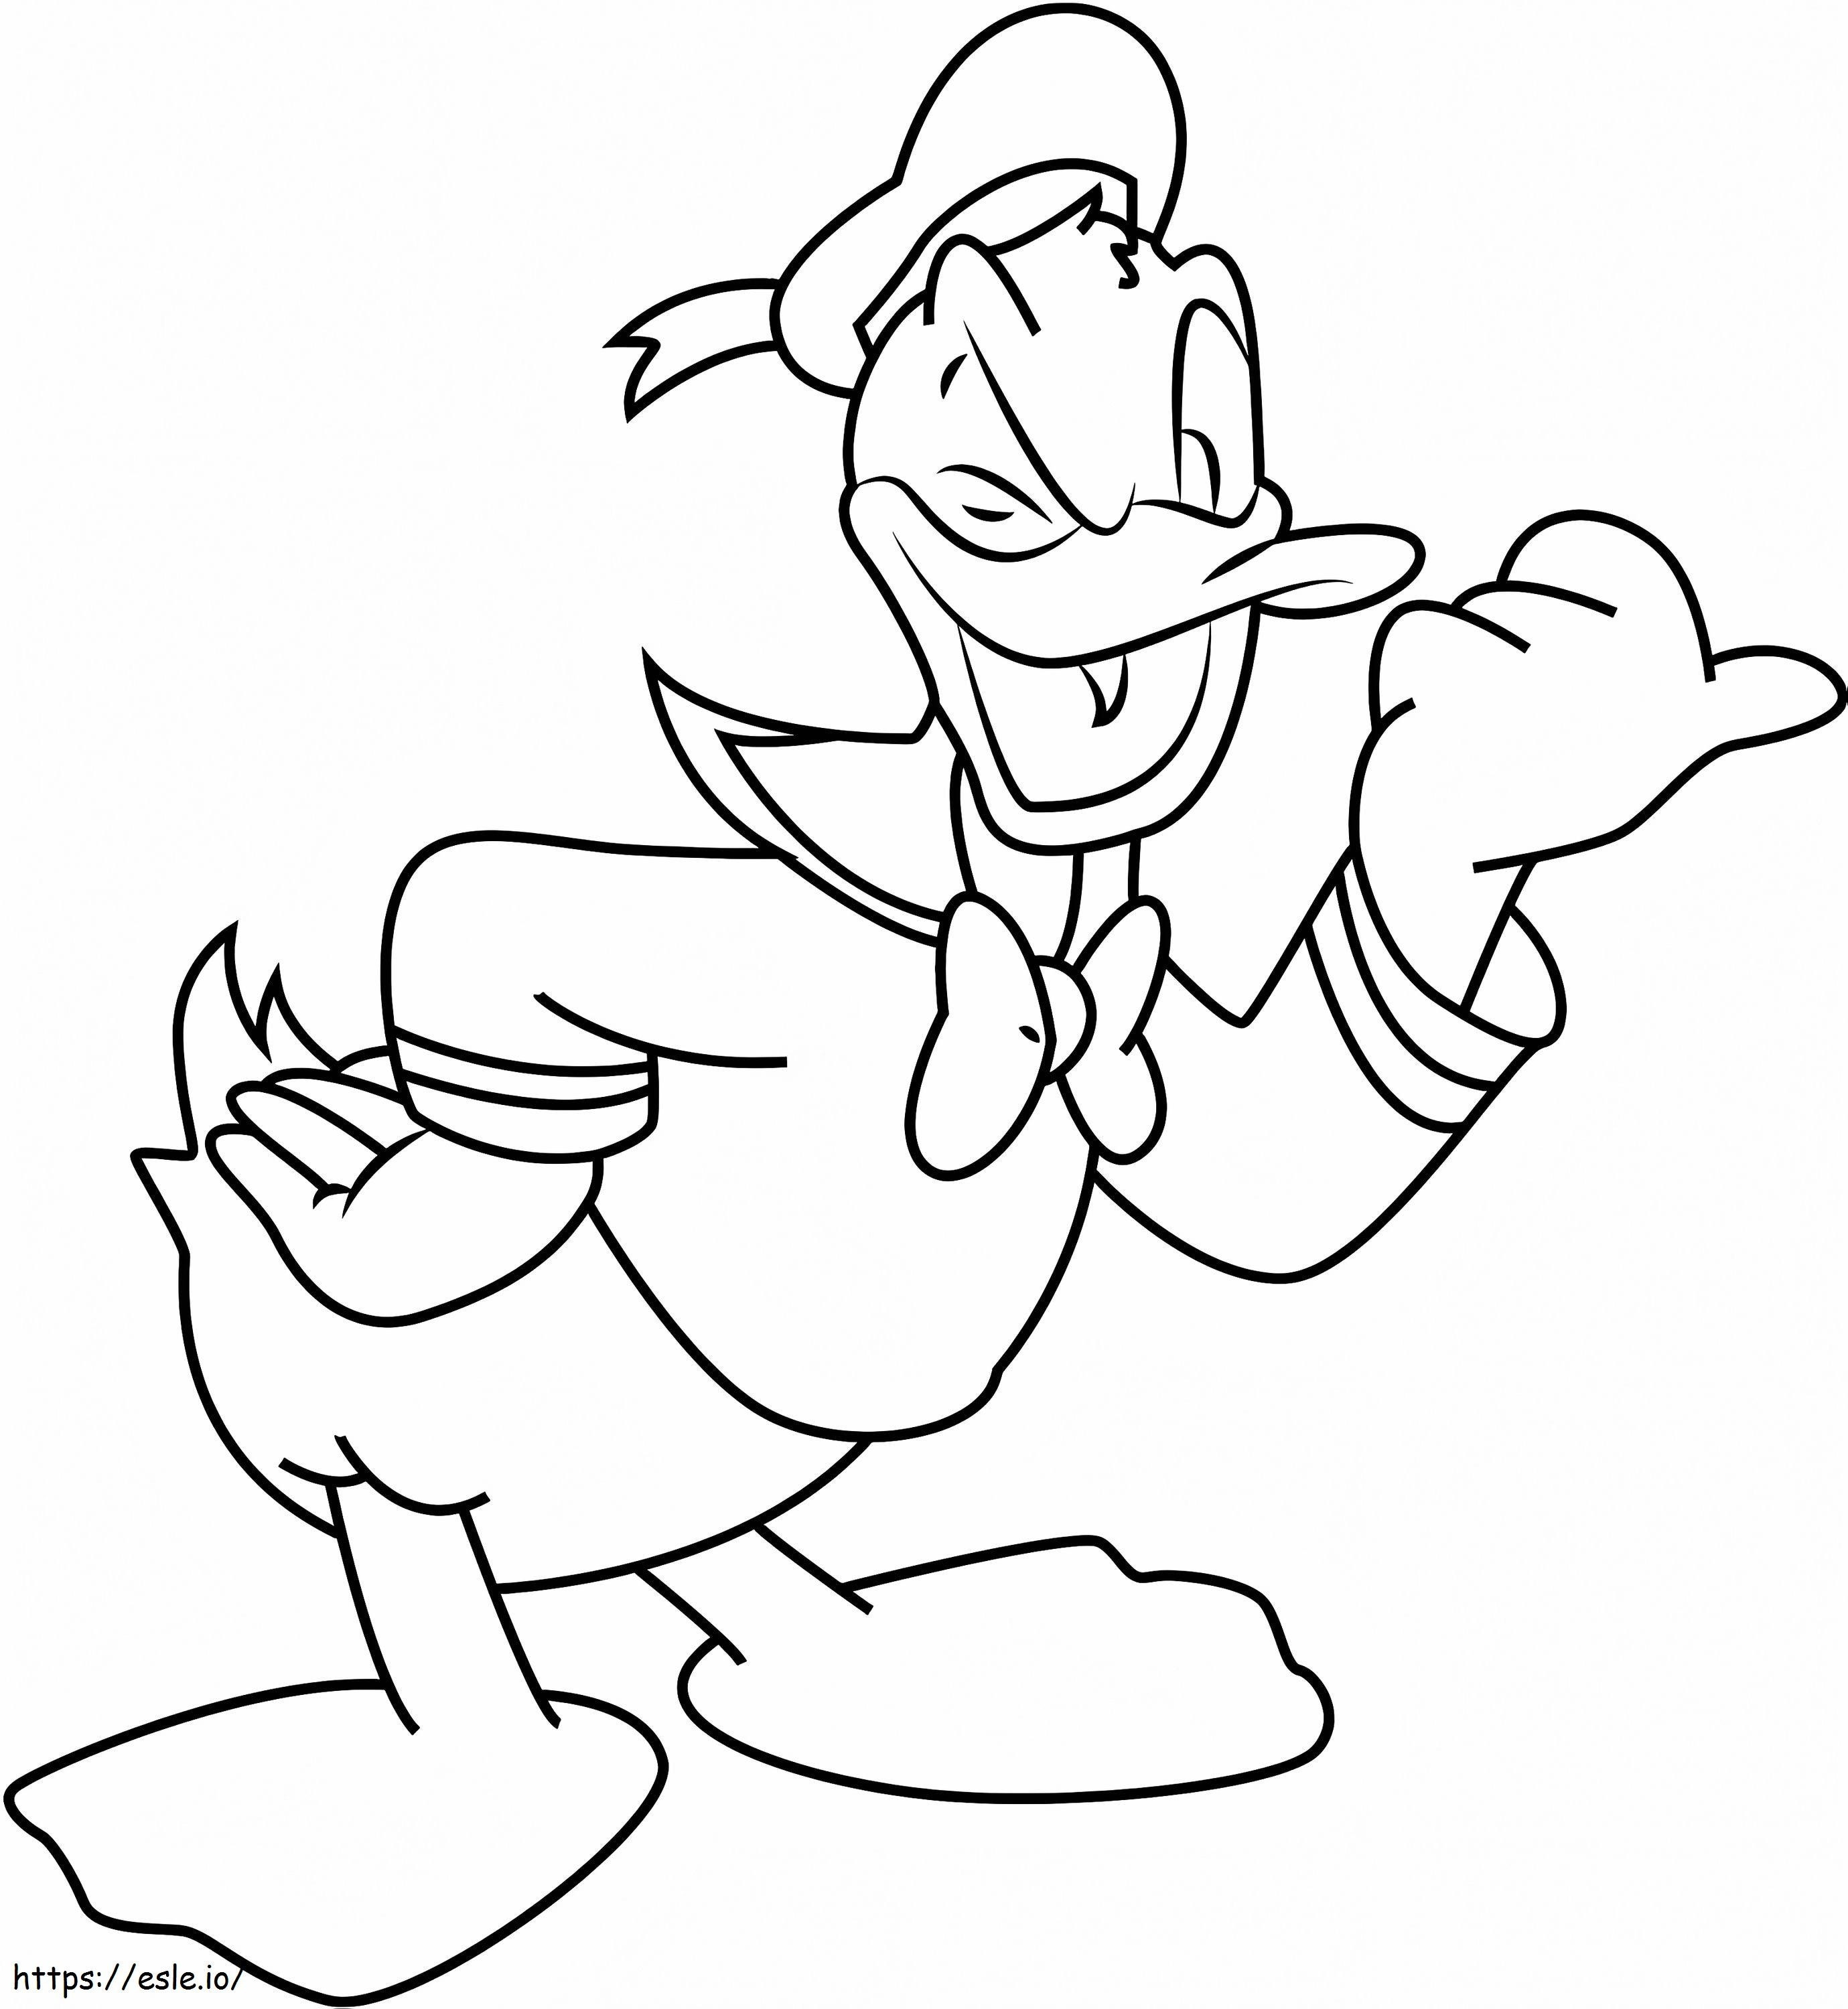 1532317680 Happy Donald Duck A4 ausmalbilder